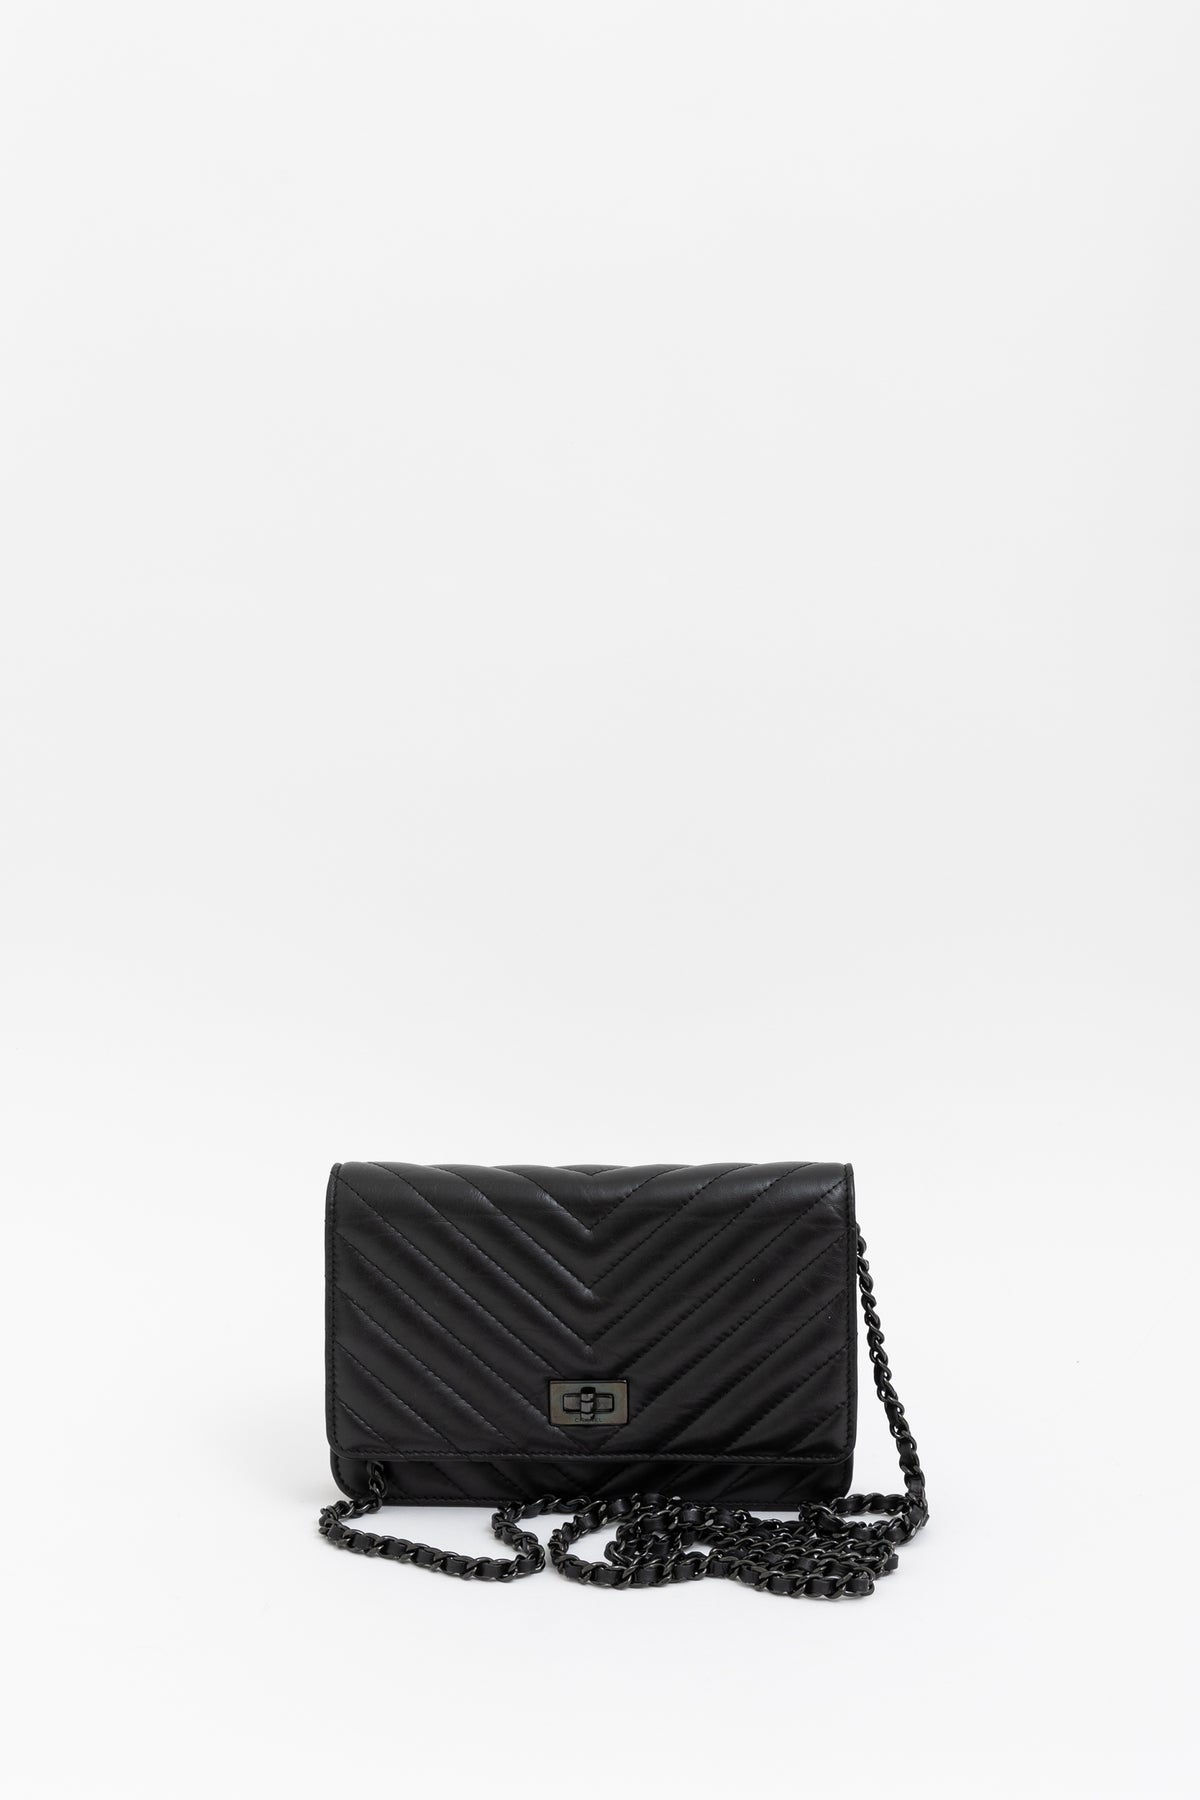 chanel black leather bags handbags